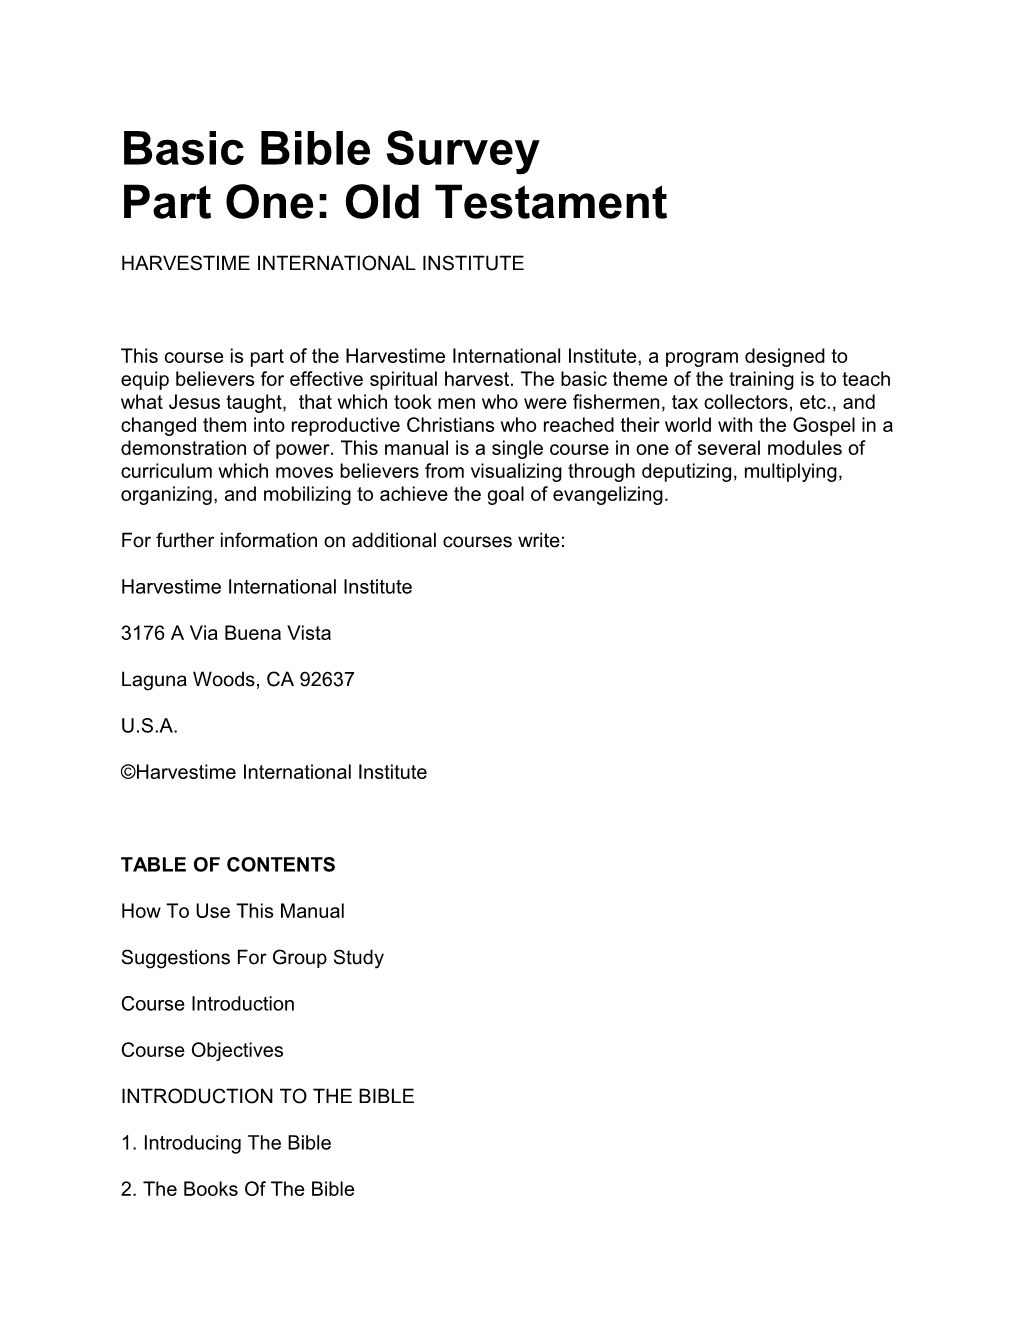 Basic Bible Survey Part One: Old Testament